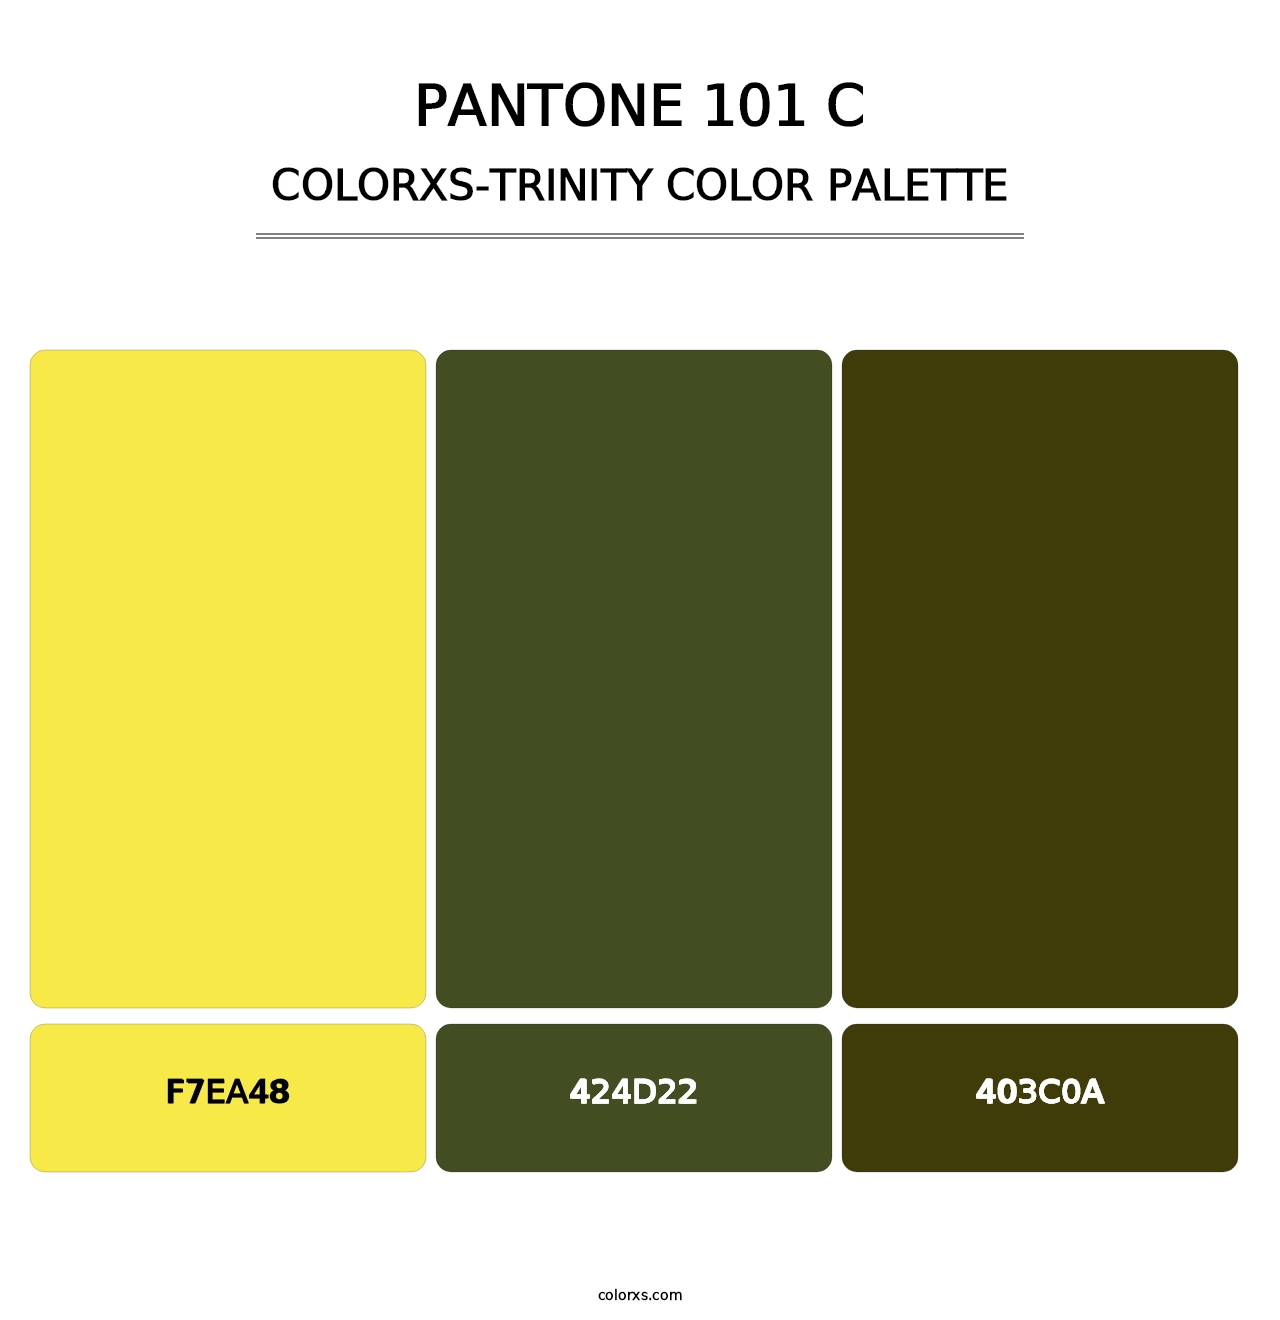 PANTONE 101 C - Colorxs Trinity Palette